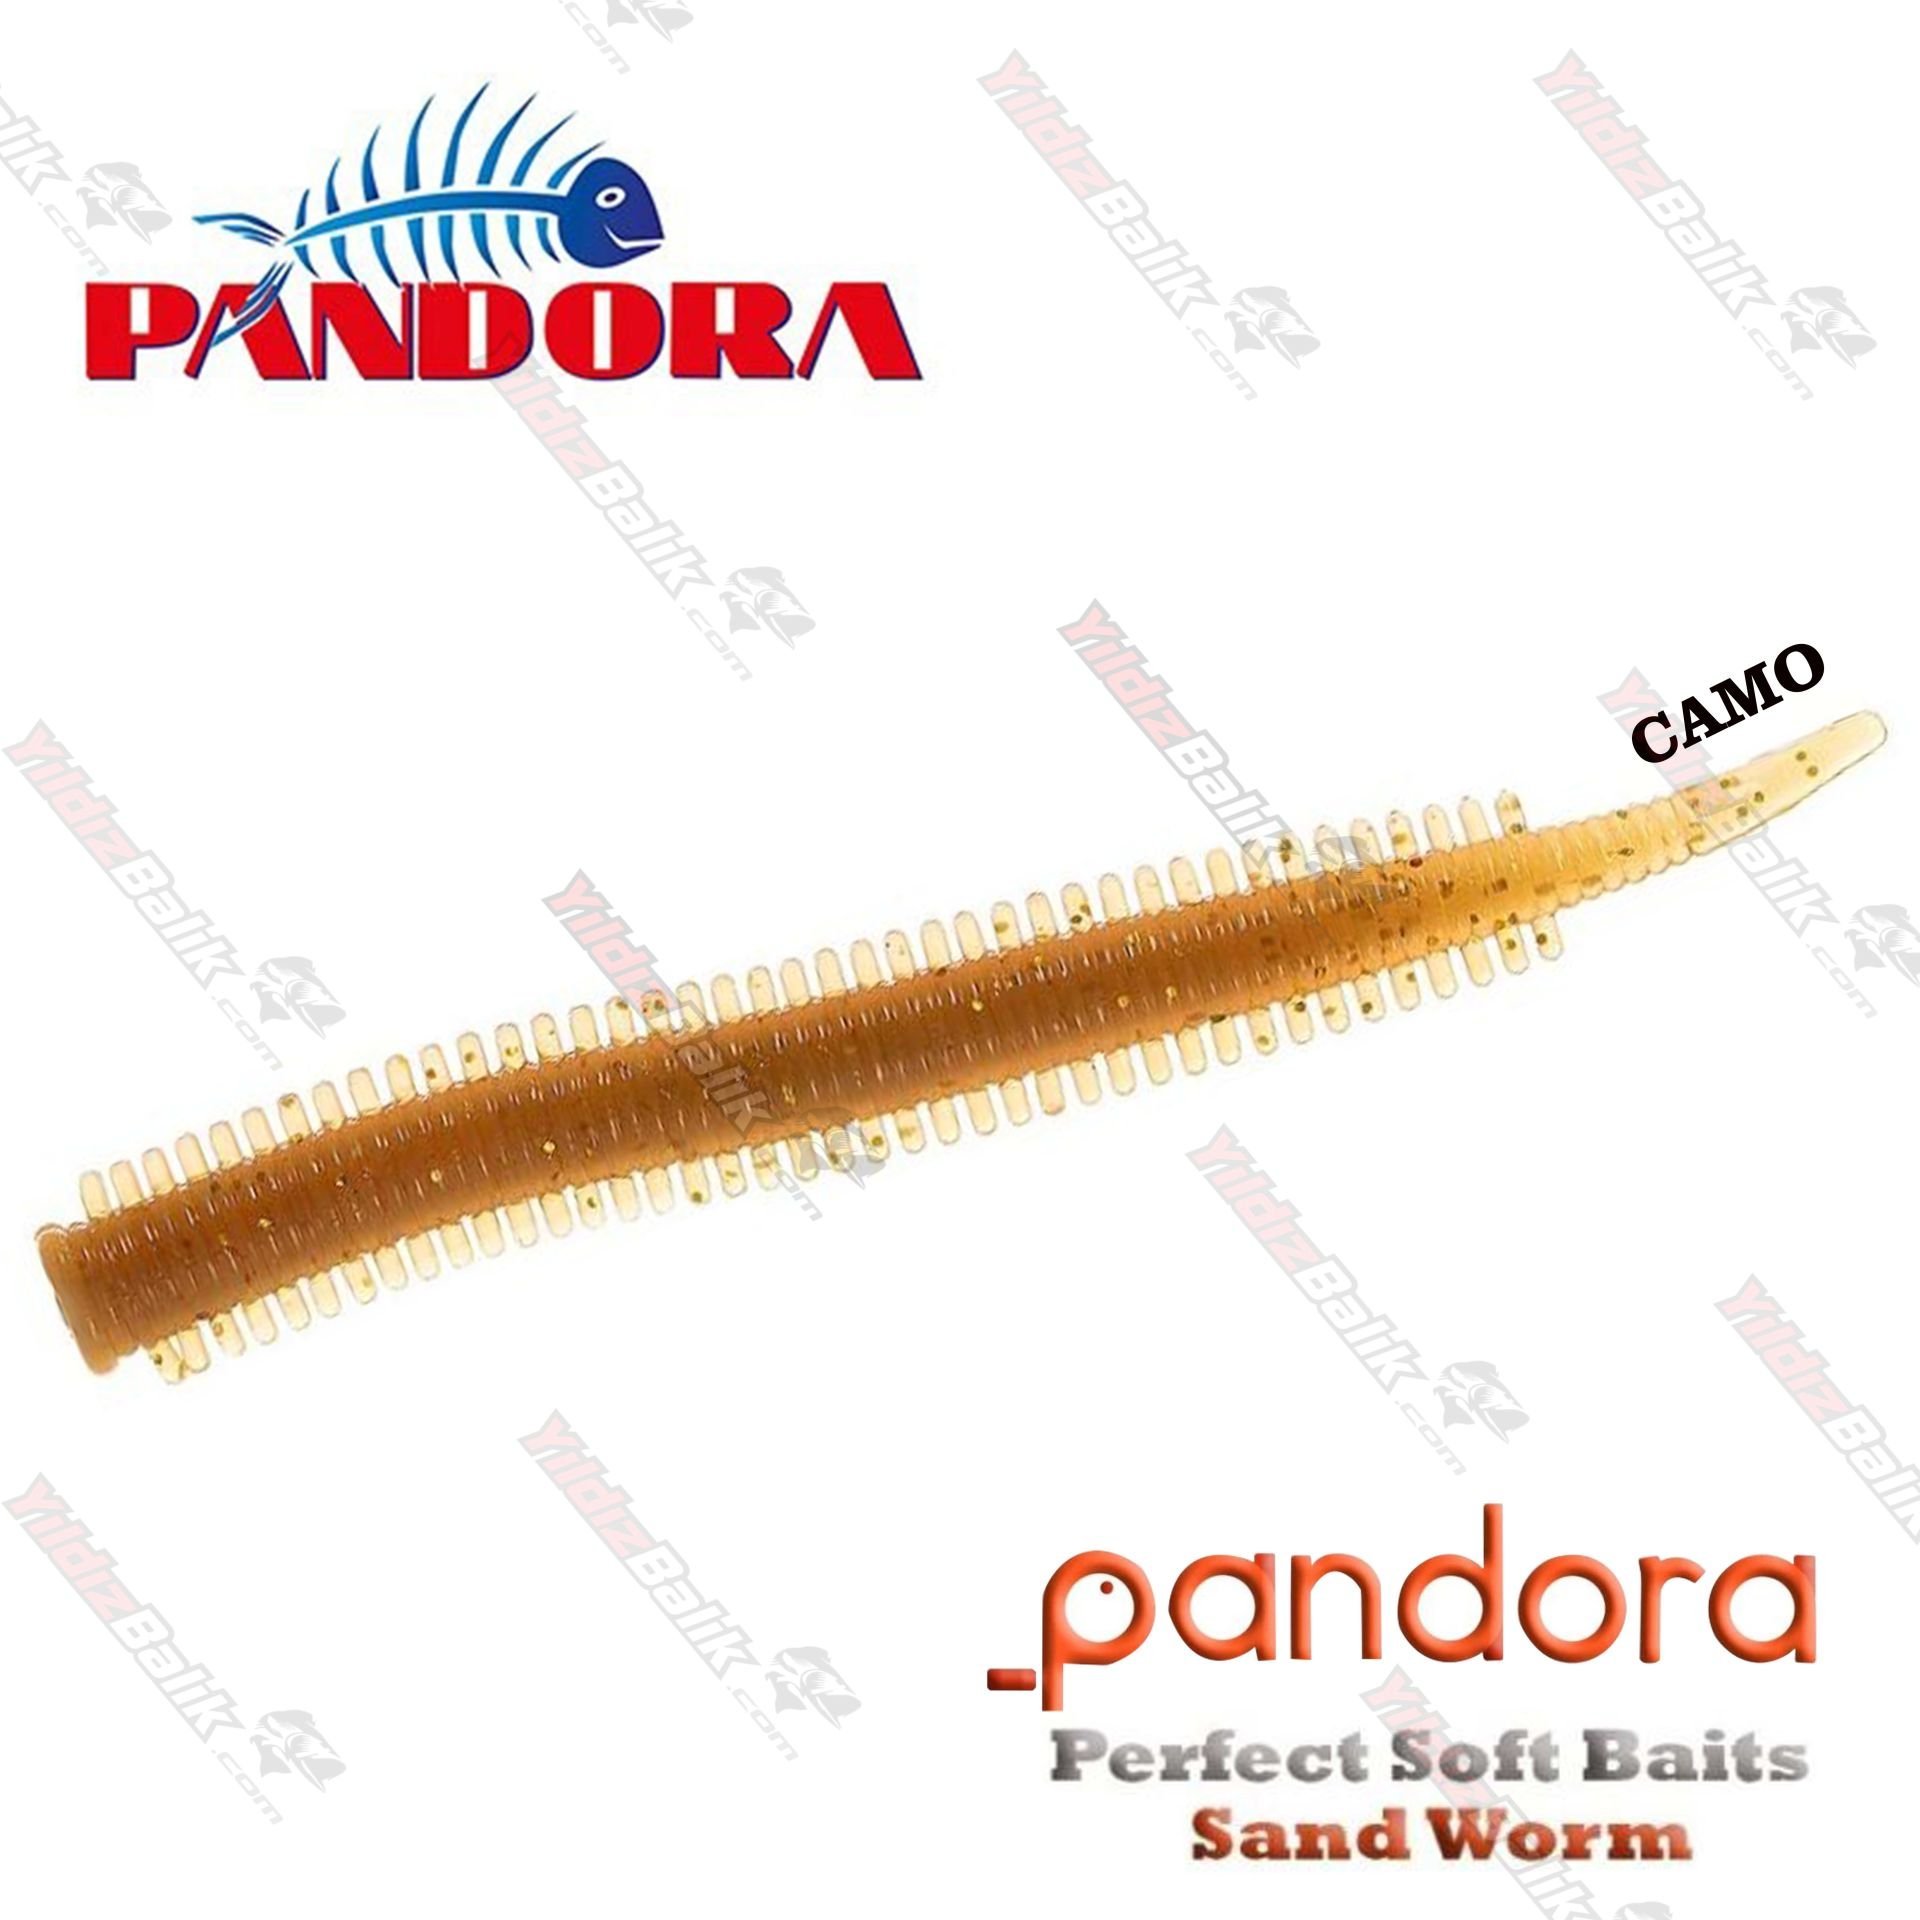 Pandora Perfect Soft Baits Sandworm 7 cm CAMO Pandora Silikon